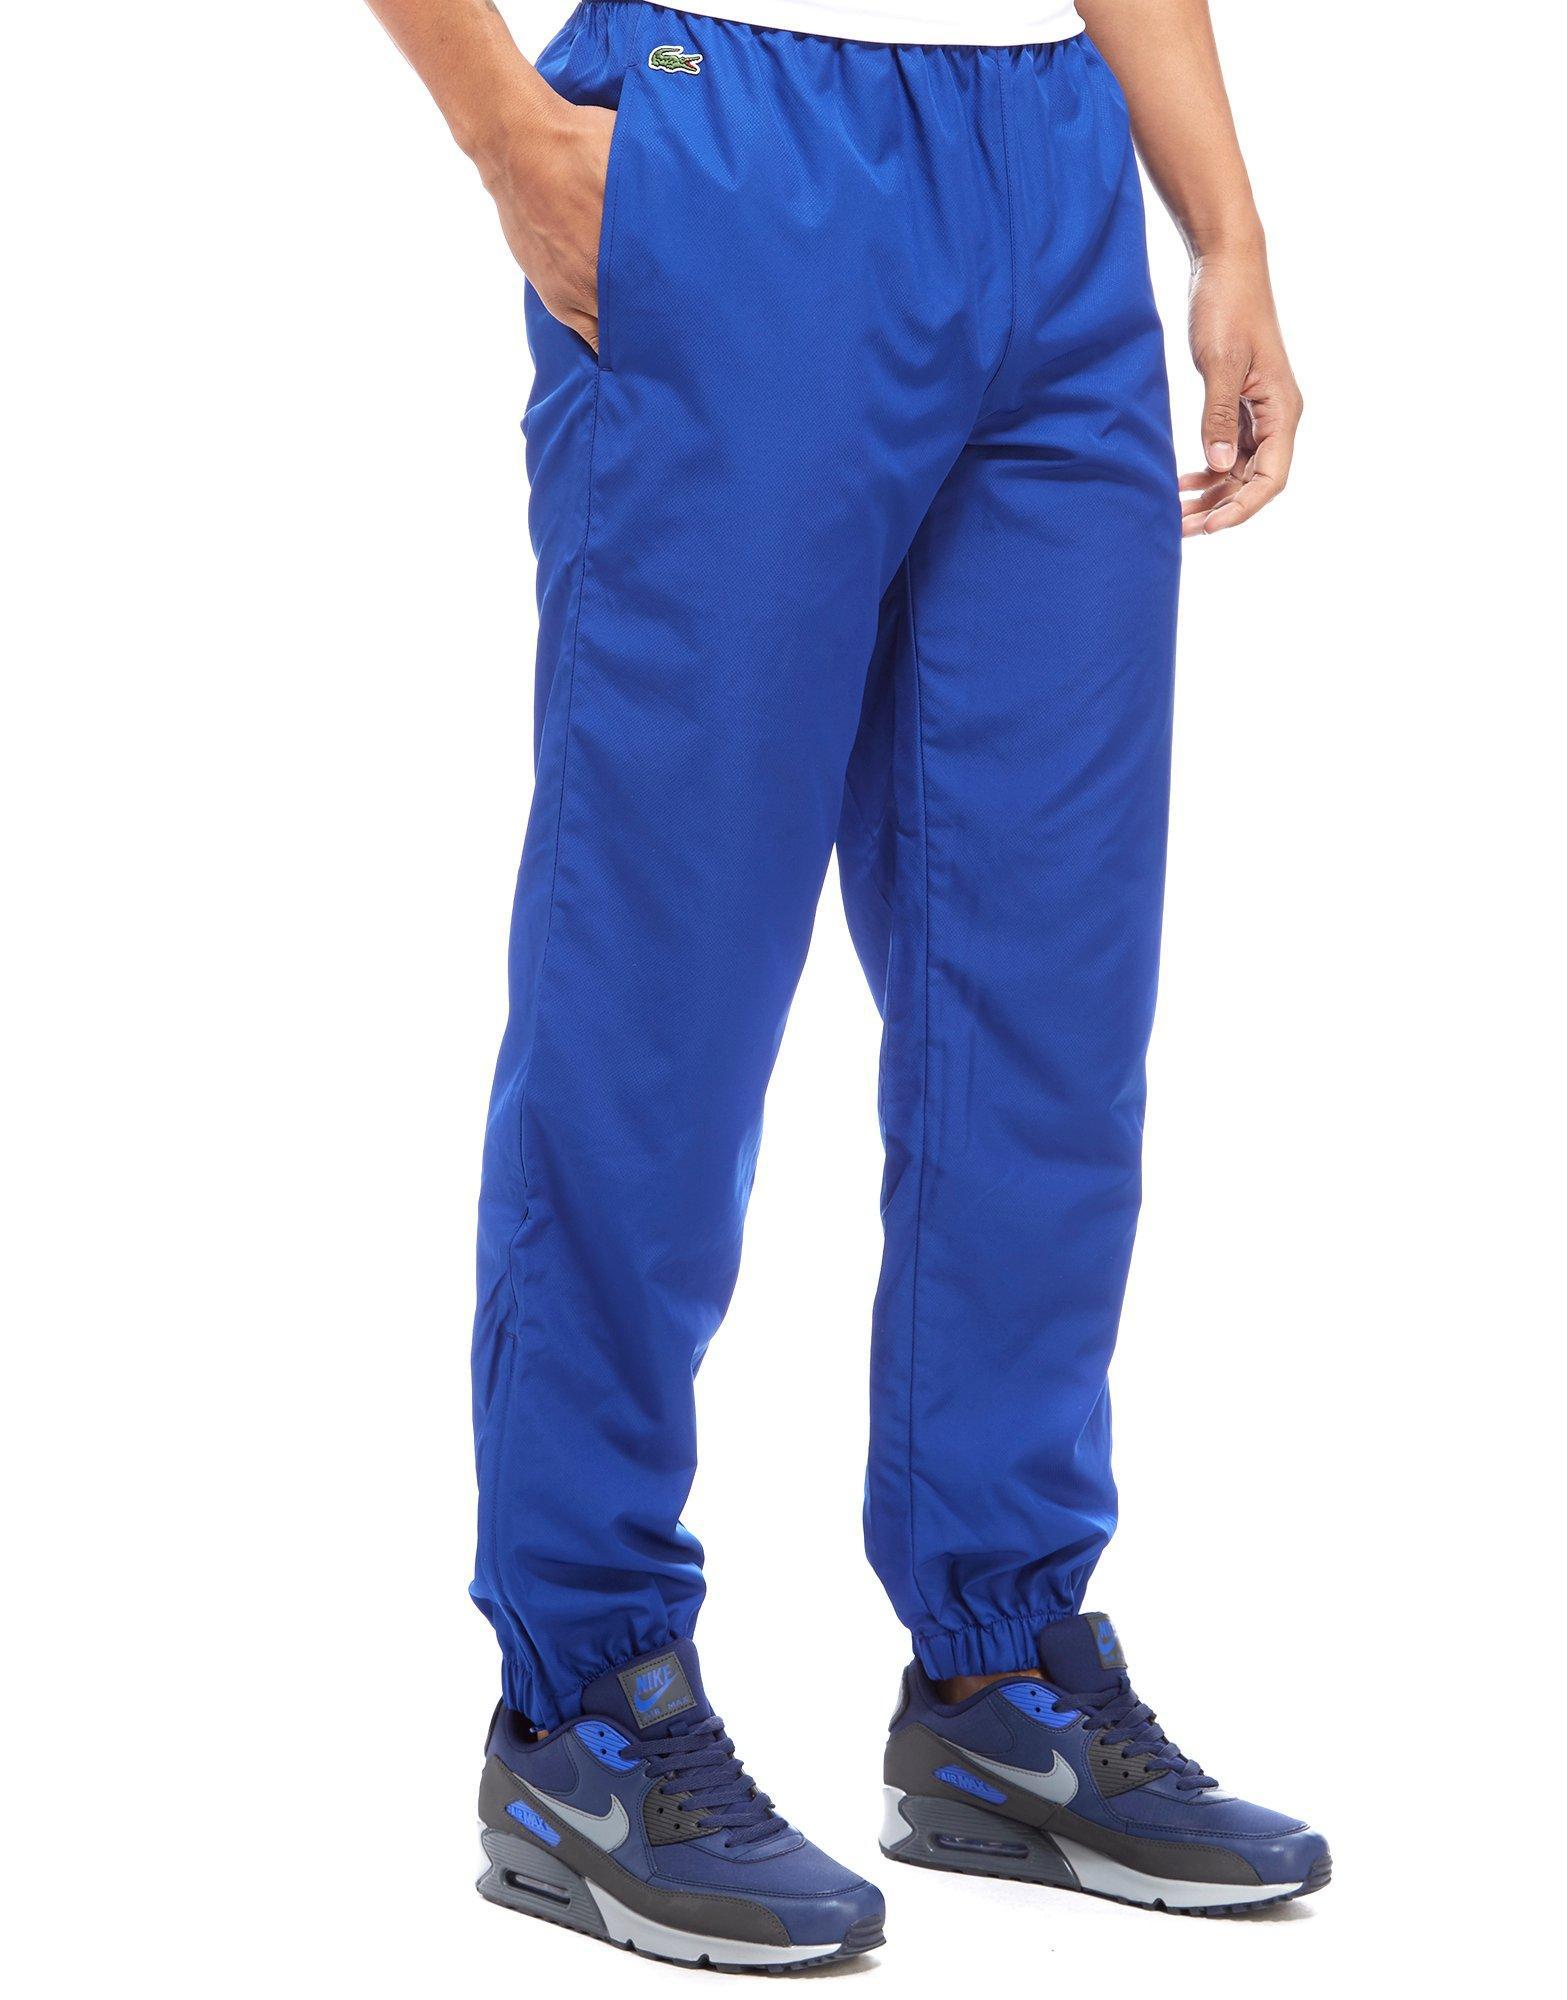 lacoste track pants blue